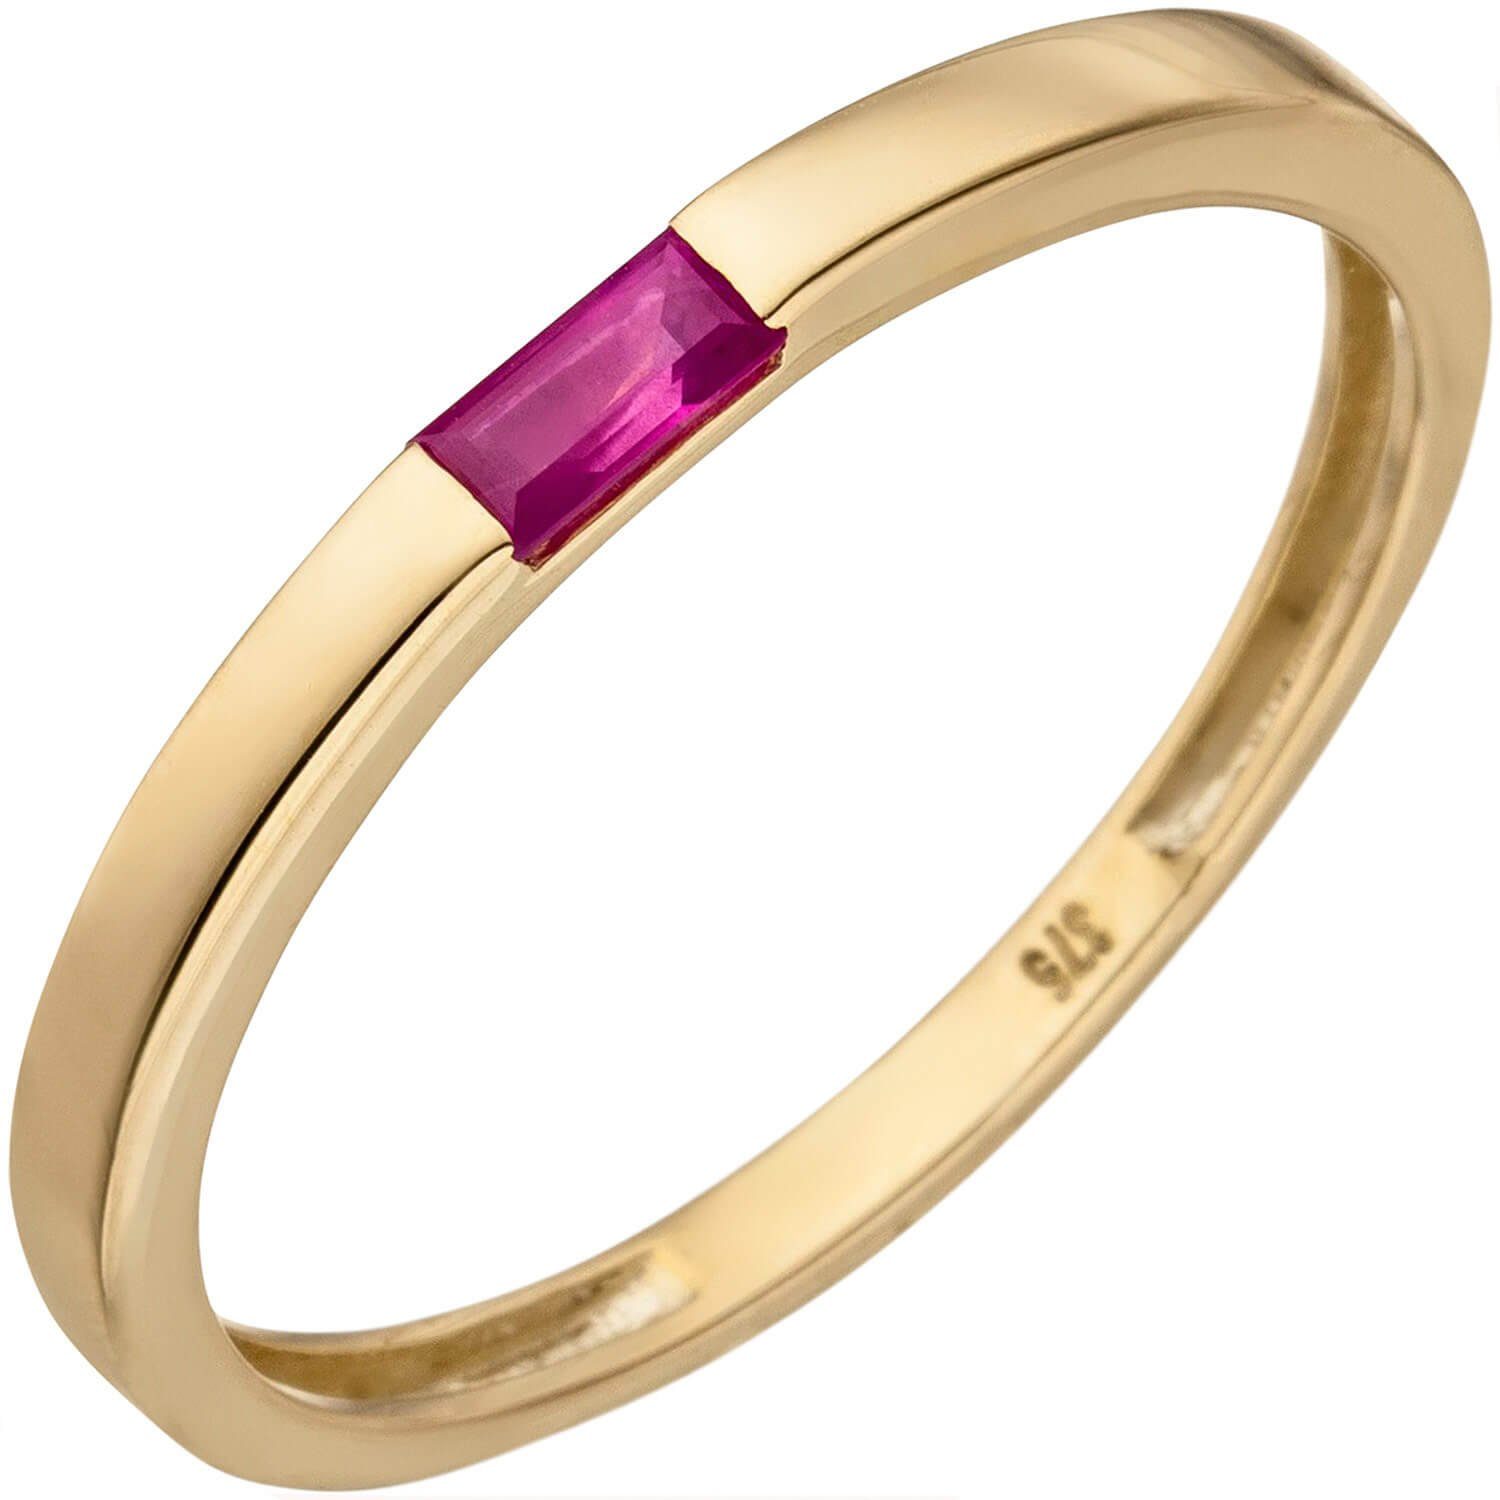 Goldring 375 375 Fingerring Damenring Ring Gelbgold Rubin Gold Gold rotem mit Schmuck Krone Fingerschmuck,